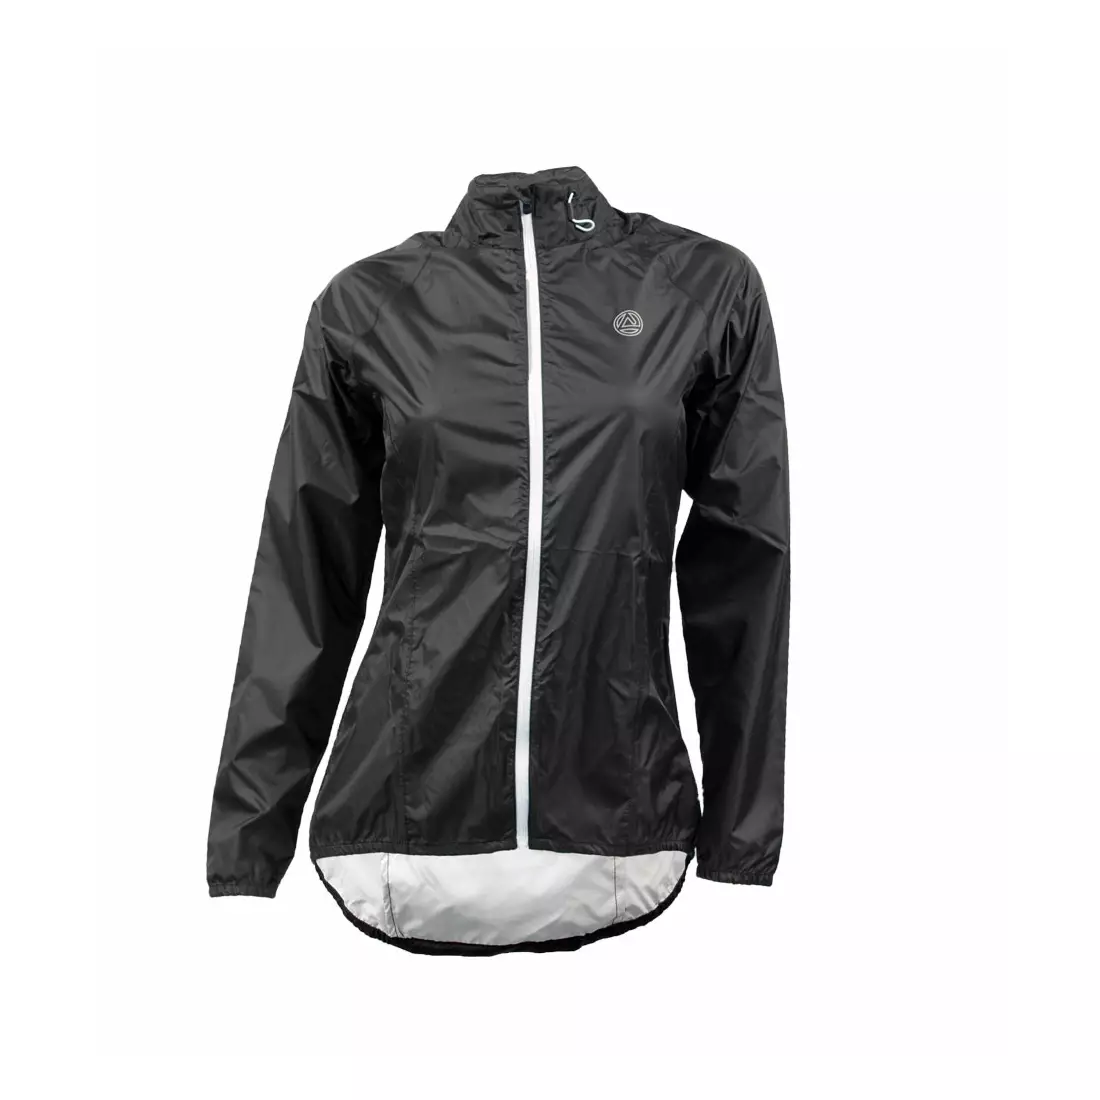 DARE2B Evident women's cycling rain jacket DWW096-800, color: black